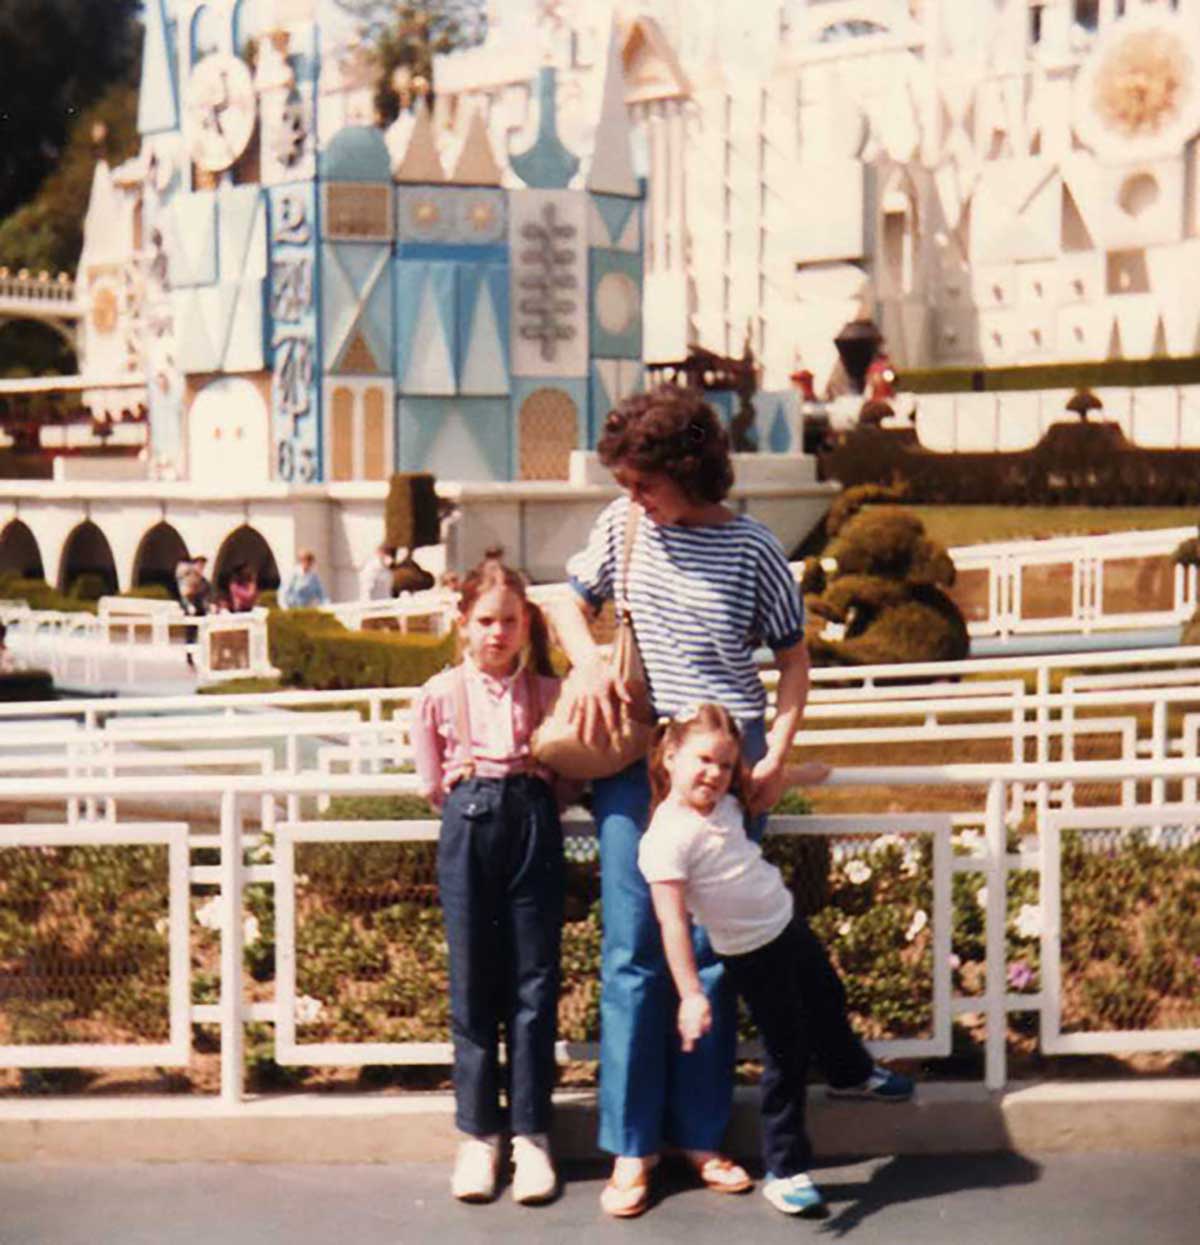 Me and my sister at Disneyland